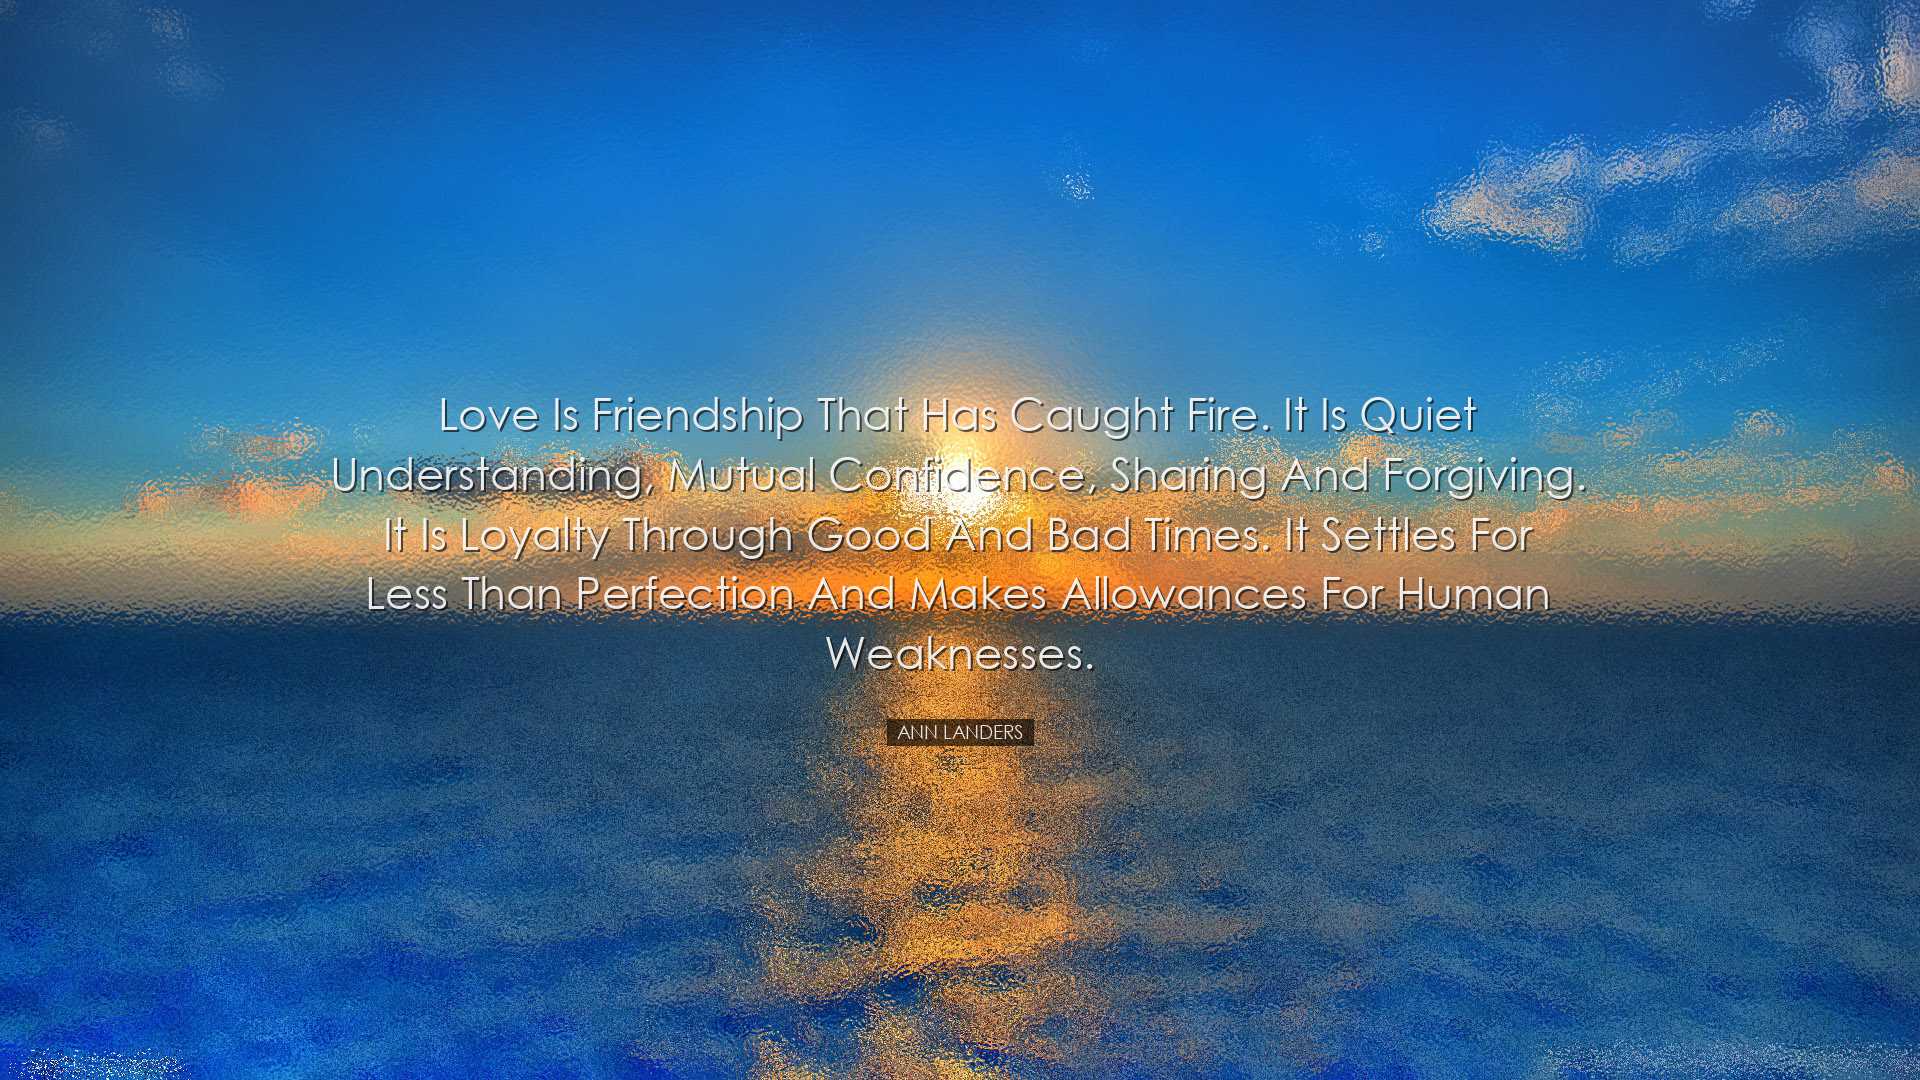 Love is friendship that has caught fire. It is quiet understanding